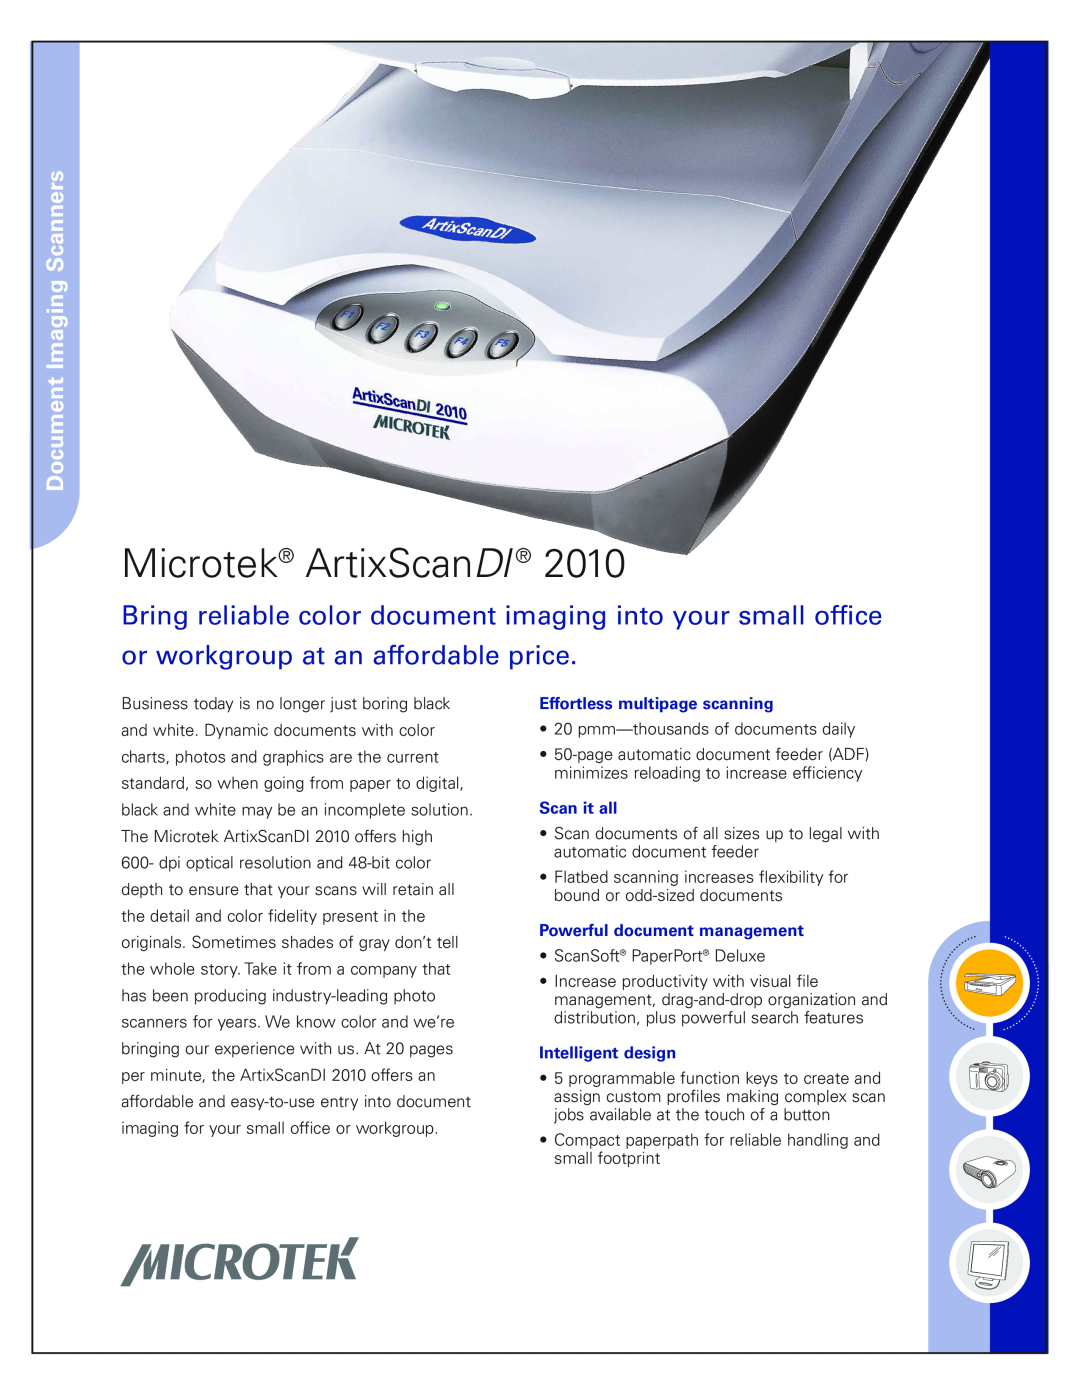 Microtek 2010 manual Effortless multipage scanning, Scan it all, Powerful document management, Intelligent design 